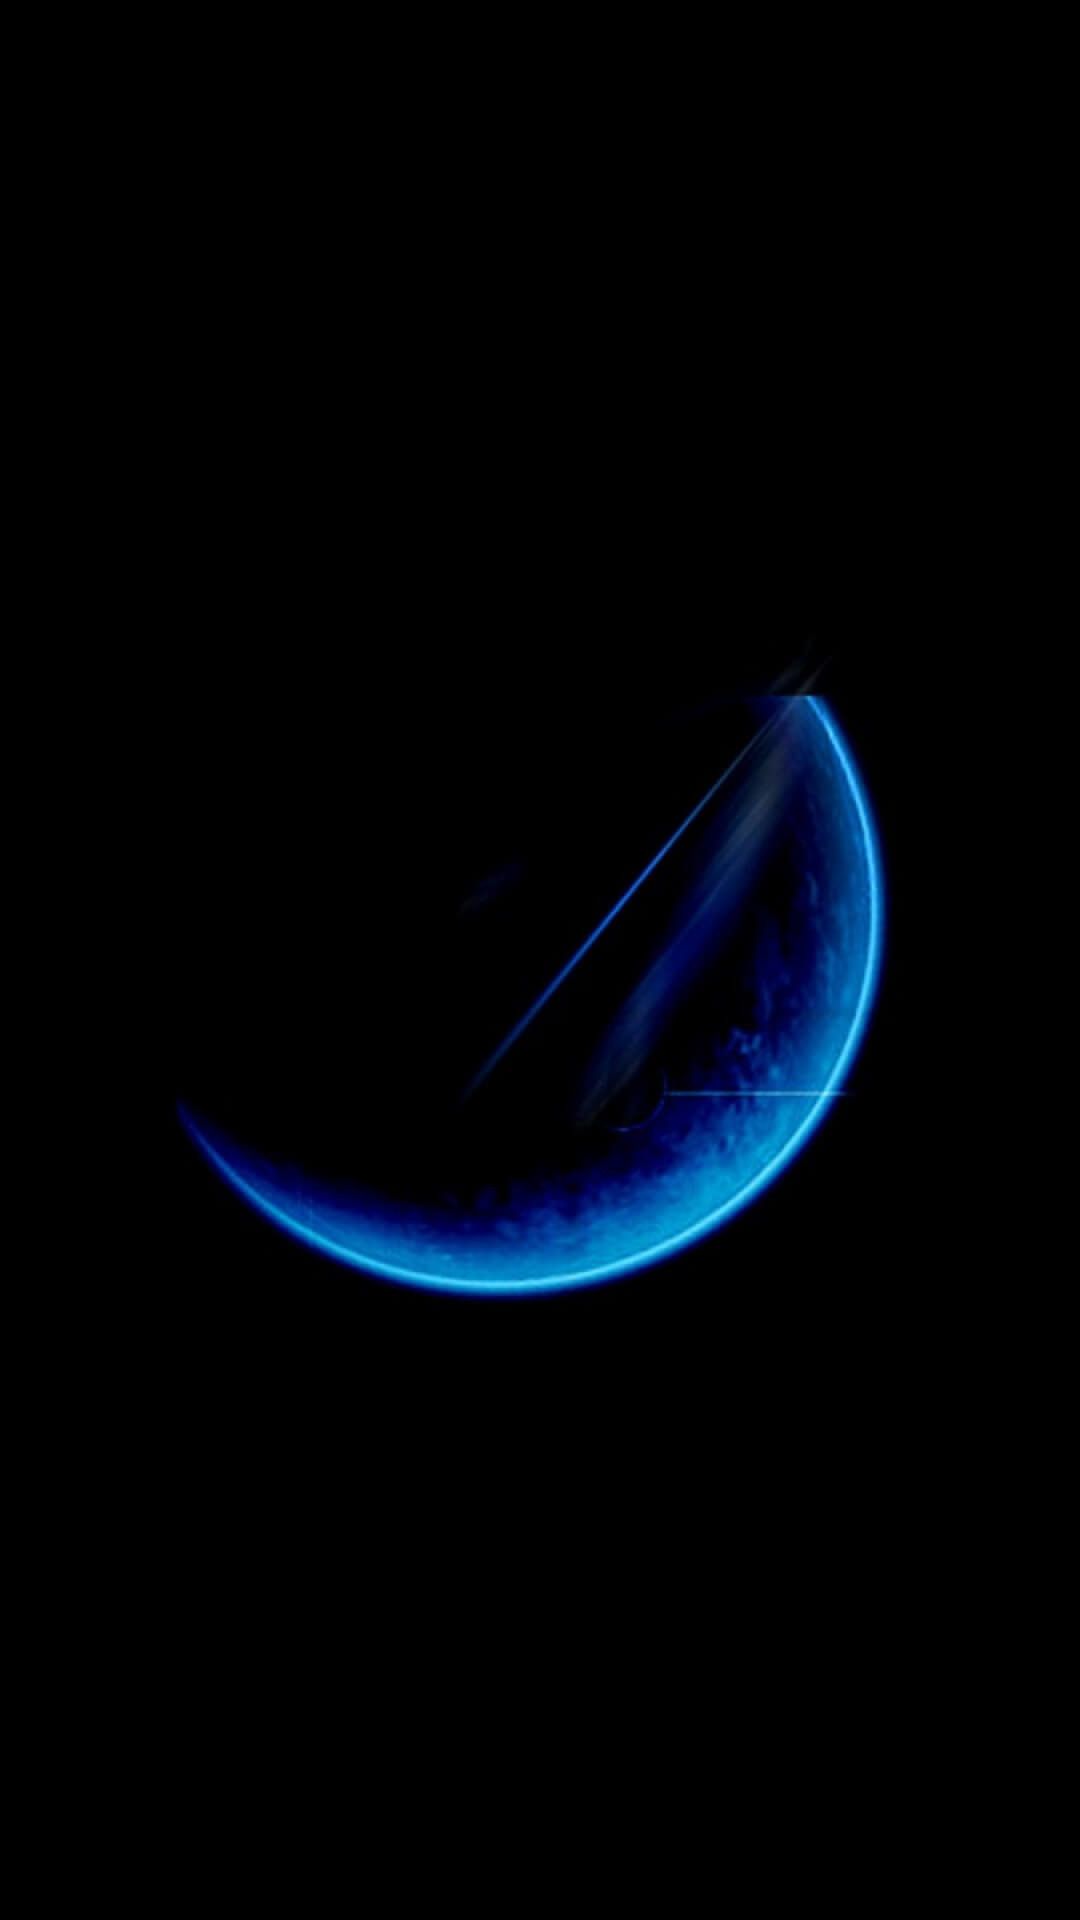 Free download Aesthetic Black And Blue Wallpaper Ios Dark phone wallpaper [1080x1920] for your Desktop, Mobile & Tablet. Explore Black Dark Blue Wallpaper. Dark Blue Wallpaper, Dark Blue Abstract